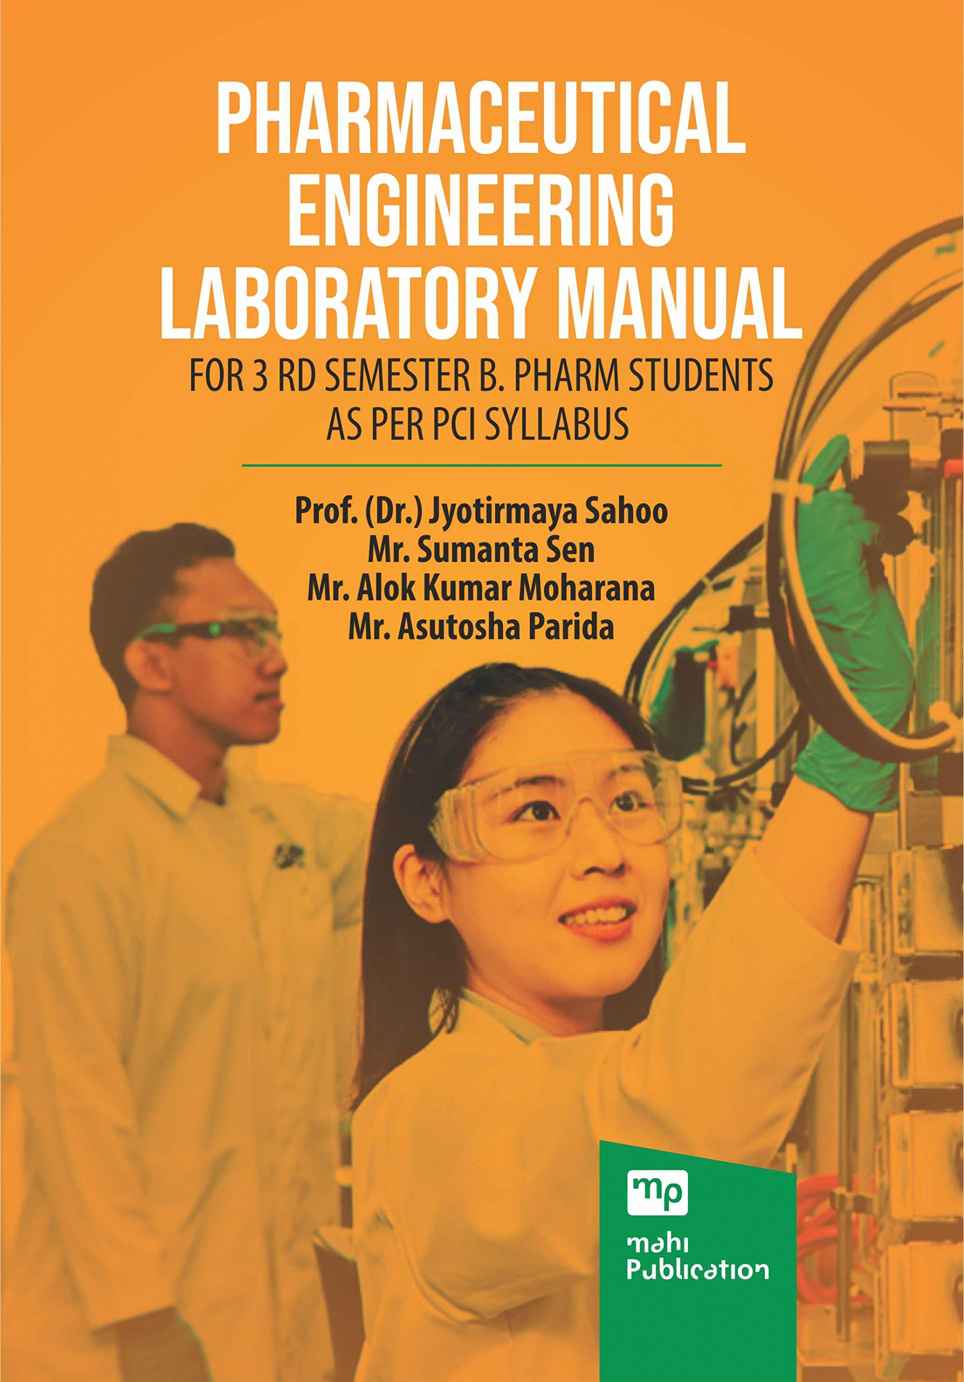 Pharmaceutical Engineering Laboratory Manual For 3rd Semester B.Pharm Students As Per PCI Syllabus